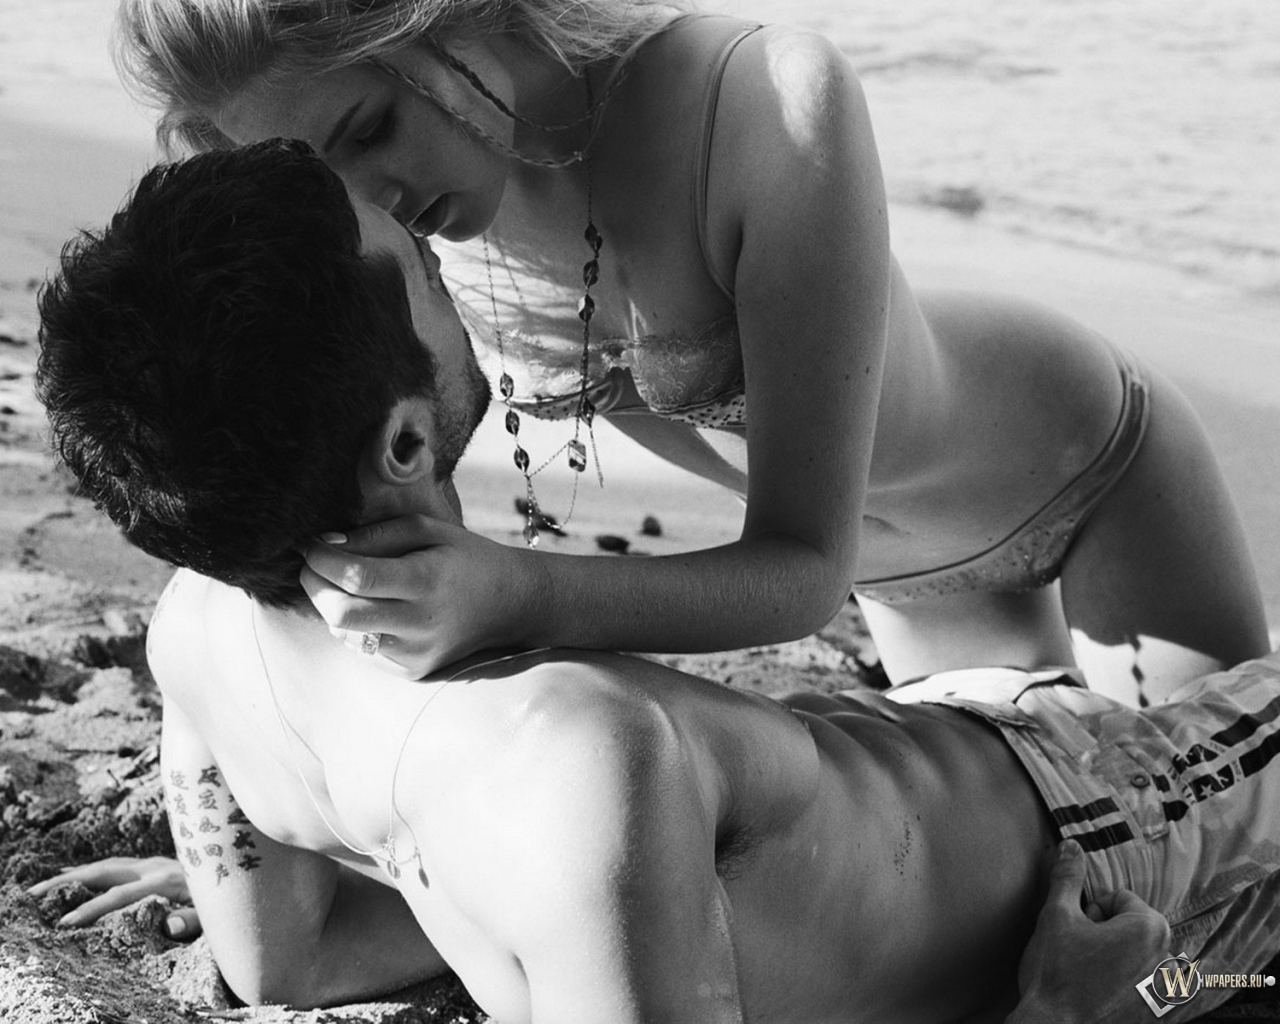 Обои, Поцелуй, Пляж, Девушка, Парень, Поцелуй, 1280x1024, картинки. 